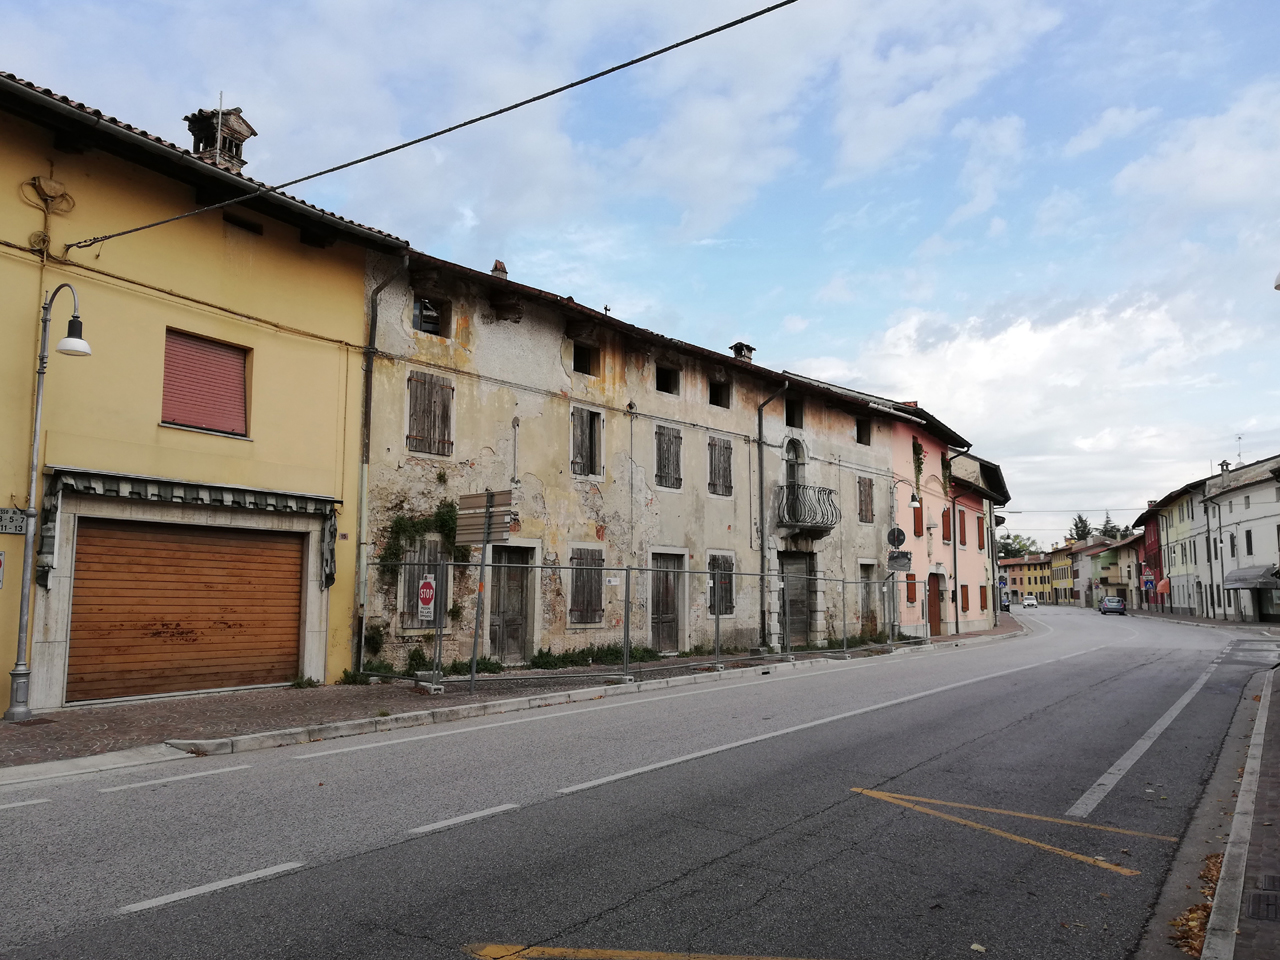 Casa Falzari (casa, in linea) - Mariano del Friuli (GO) 